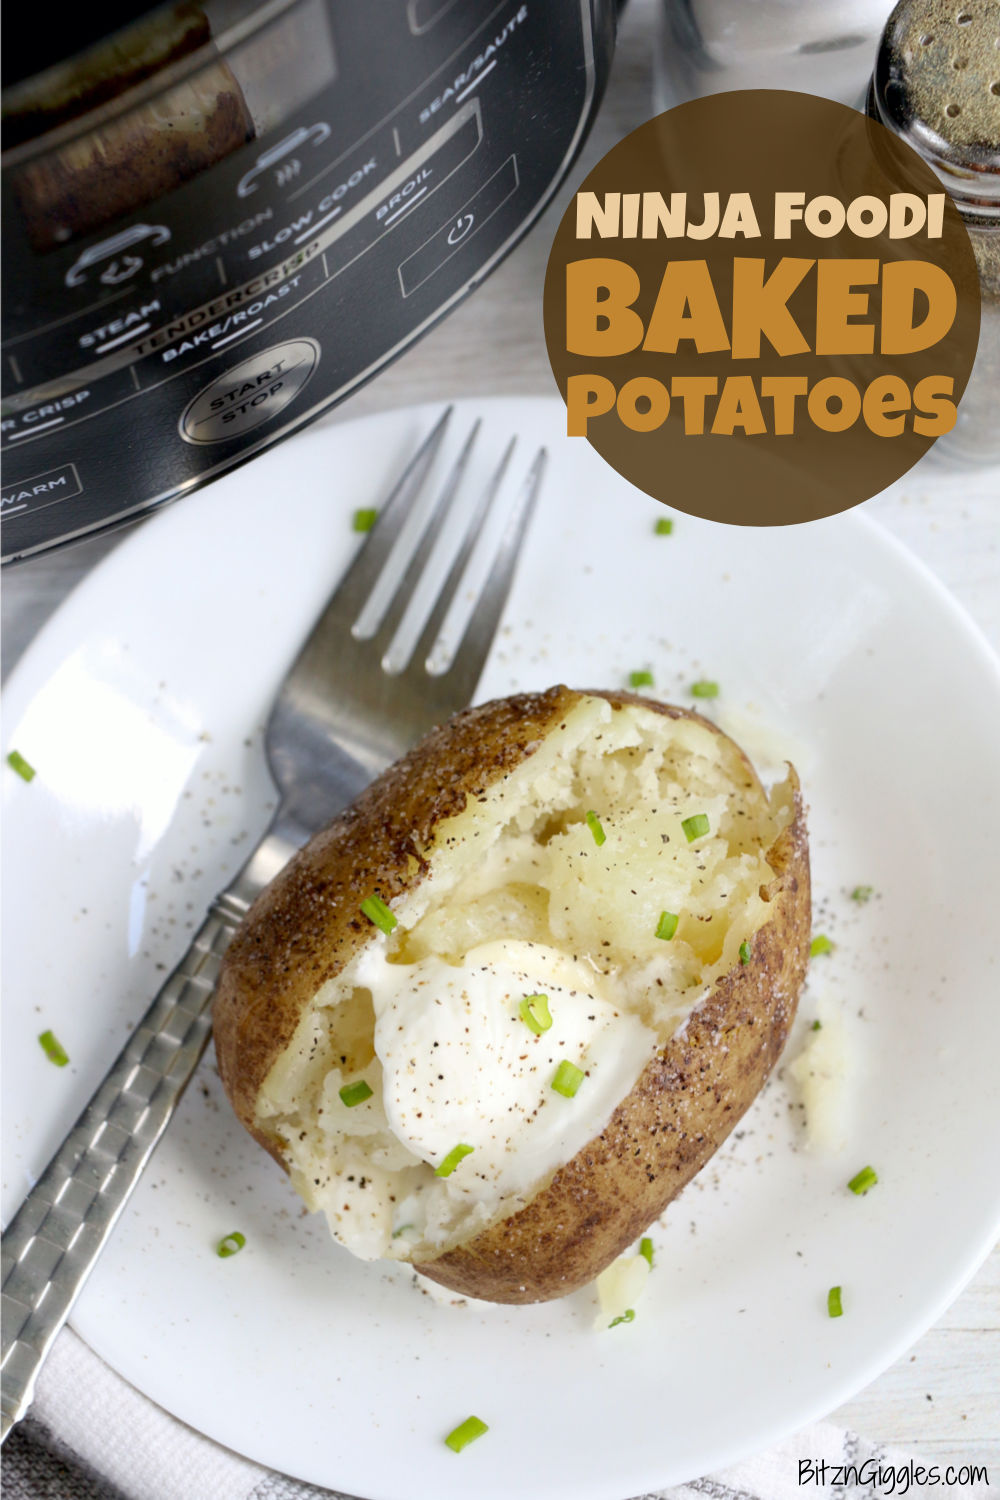 https://bitzngiggles.com/wp-content/uploads/2021/05/Ninja-Foodi-Baked-Potatoes-Pinterest2.jpg